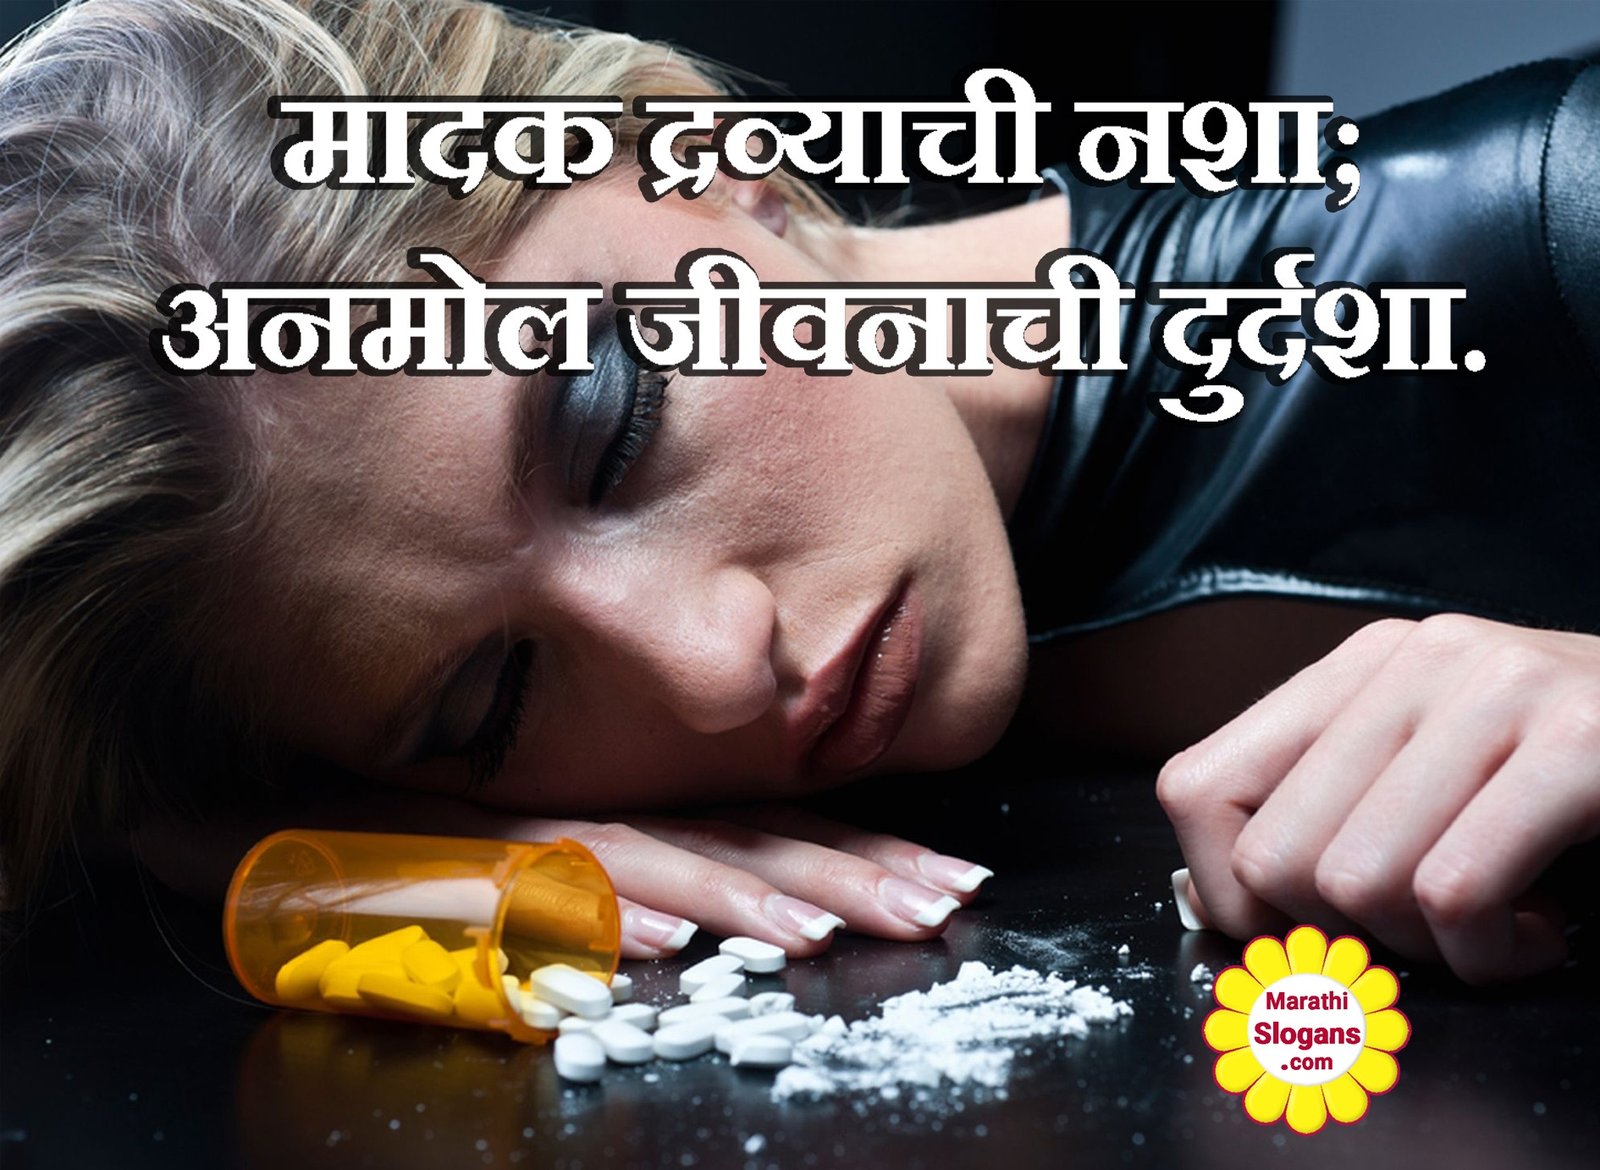 speech on drug addiction in marathi